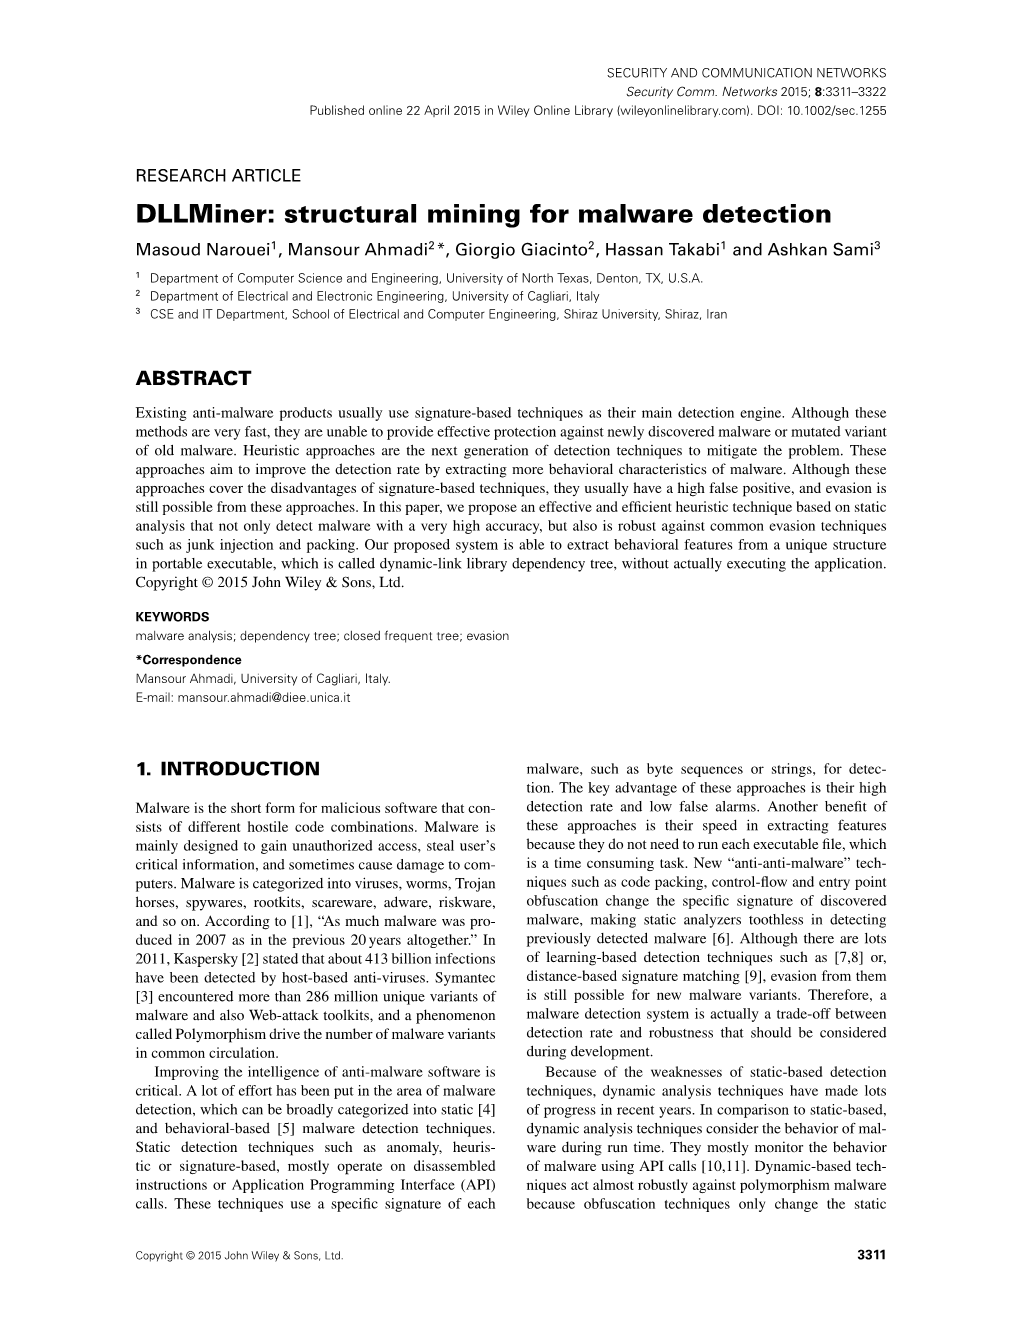 Dllminer: Structural Mining for Malware Detection Masoud Narouei1, Mansour Ahmadi2 *, Giorgio Giacinto2, Hassan Takabi1 Andashkansami3